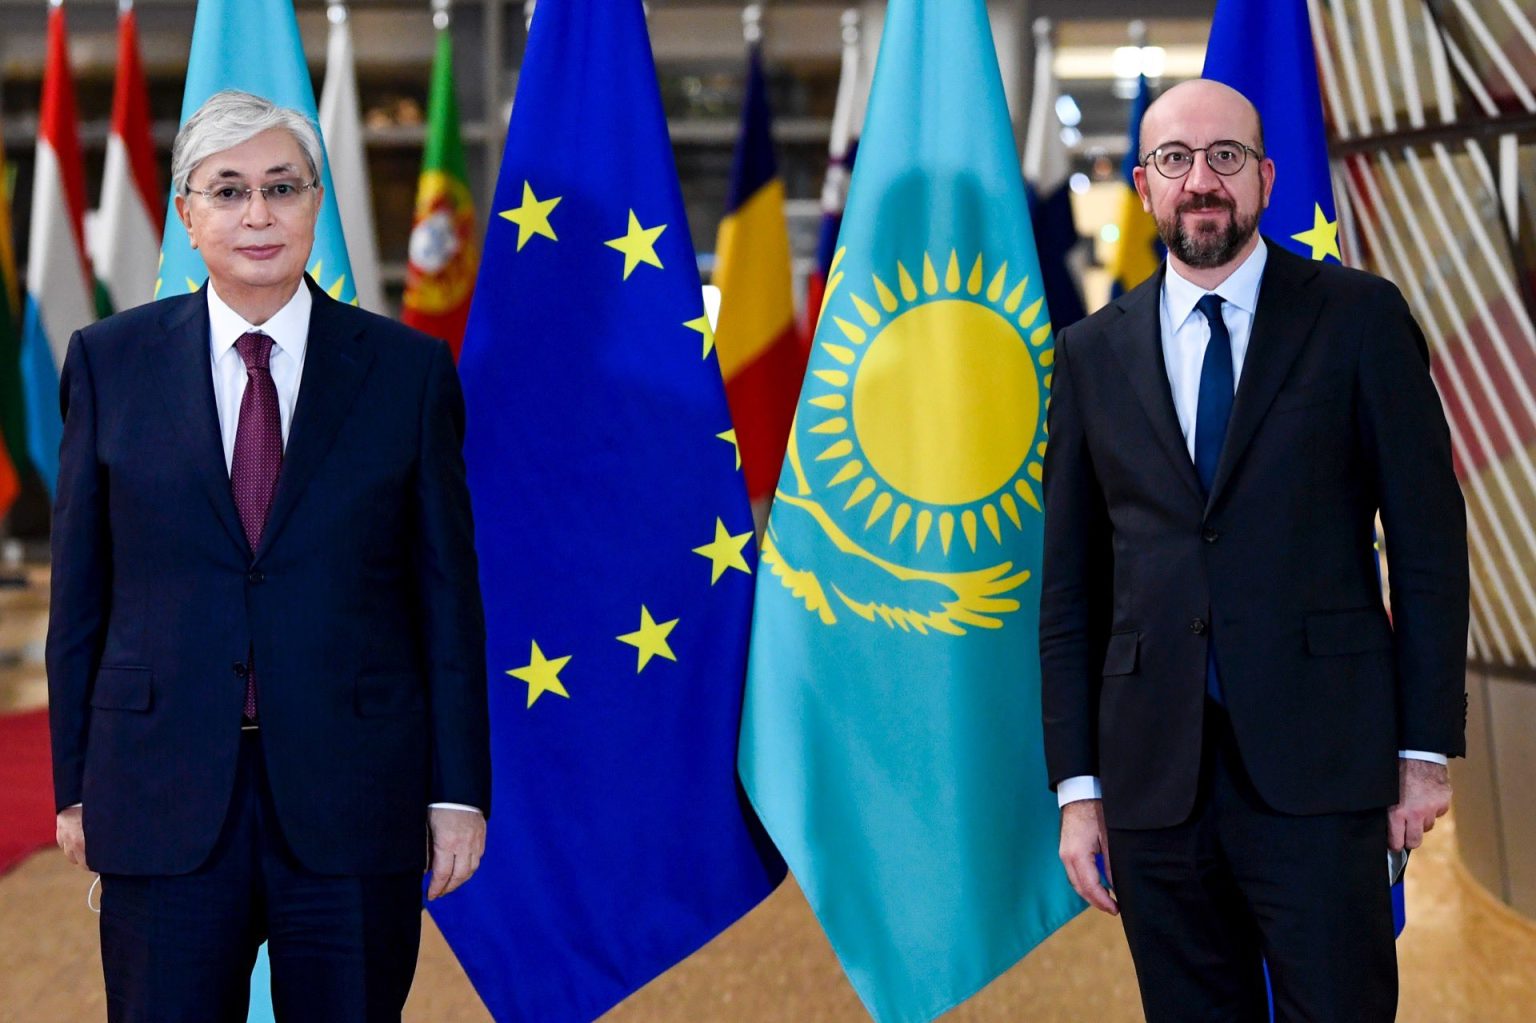 EU and Kazakhstan leaders meet to discuss future cooperation